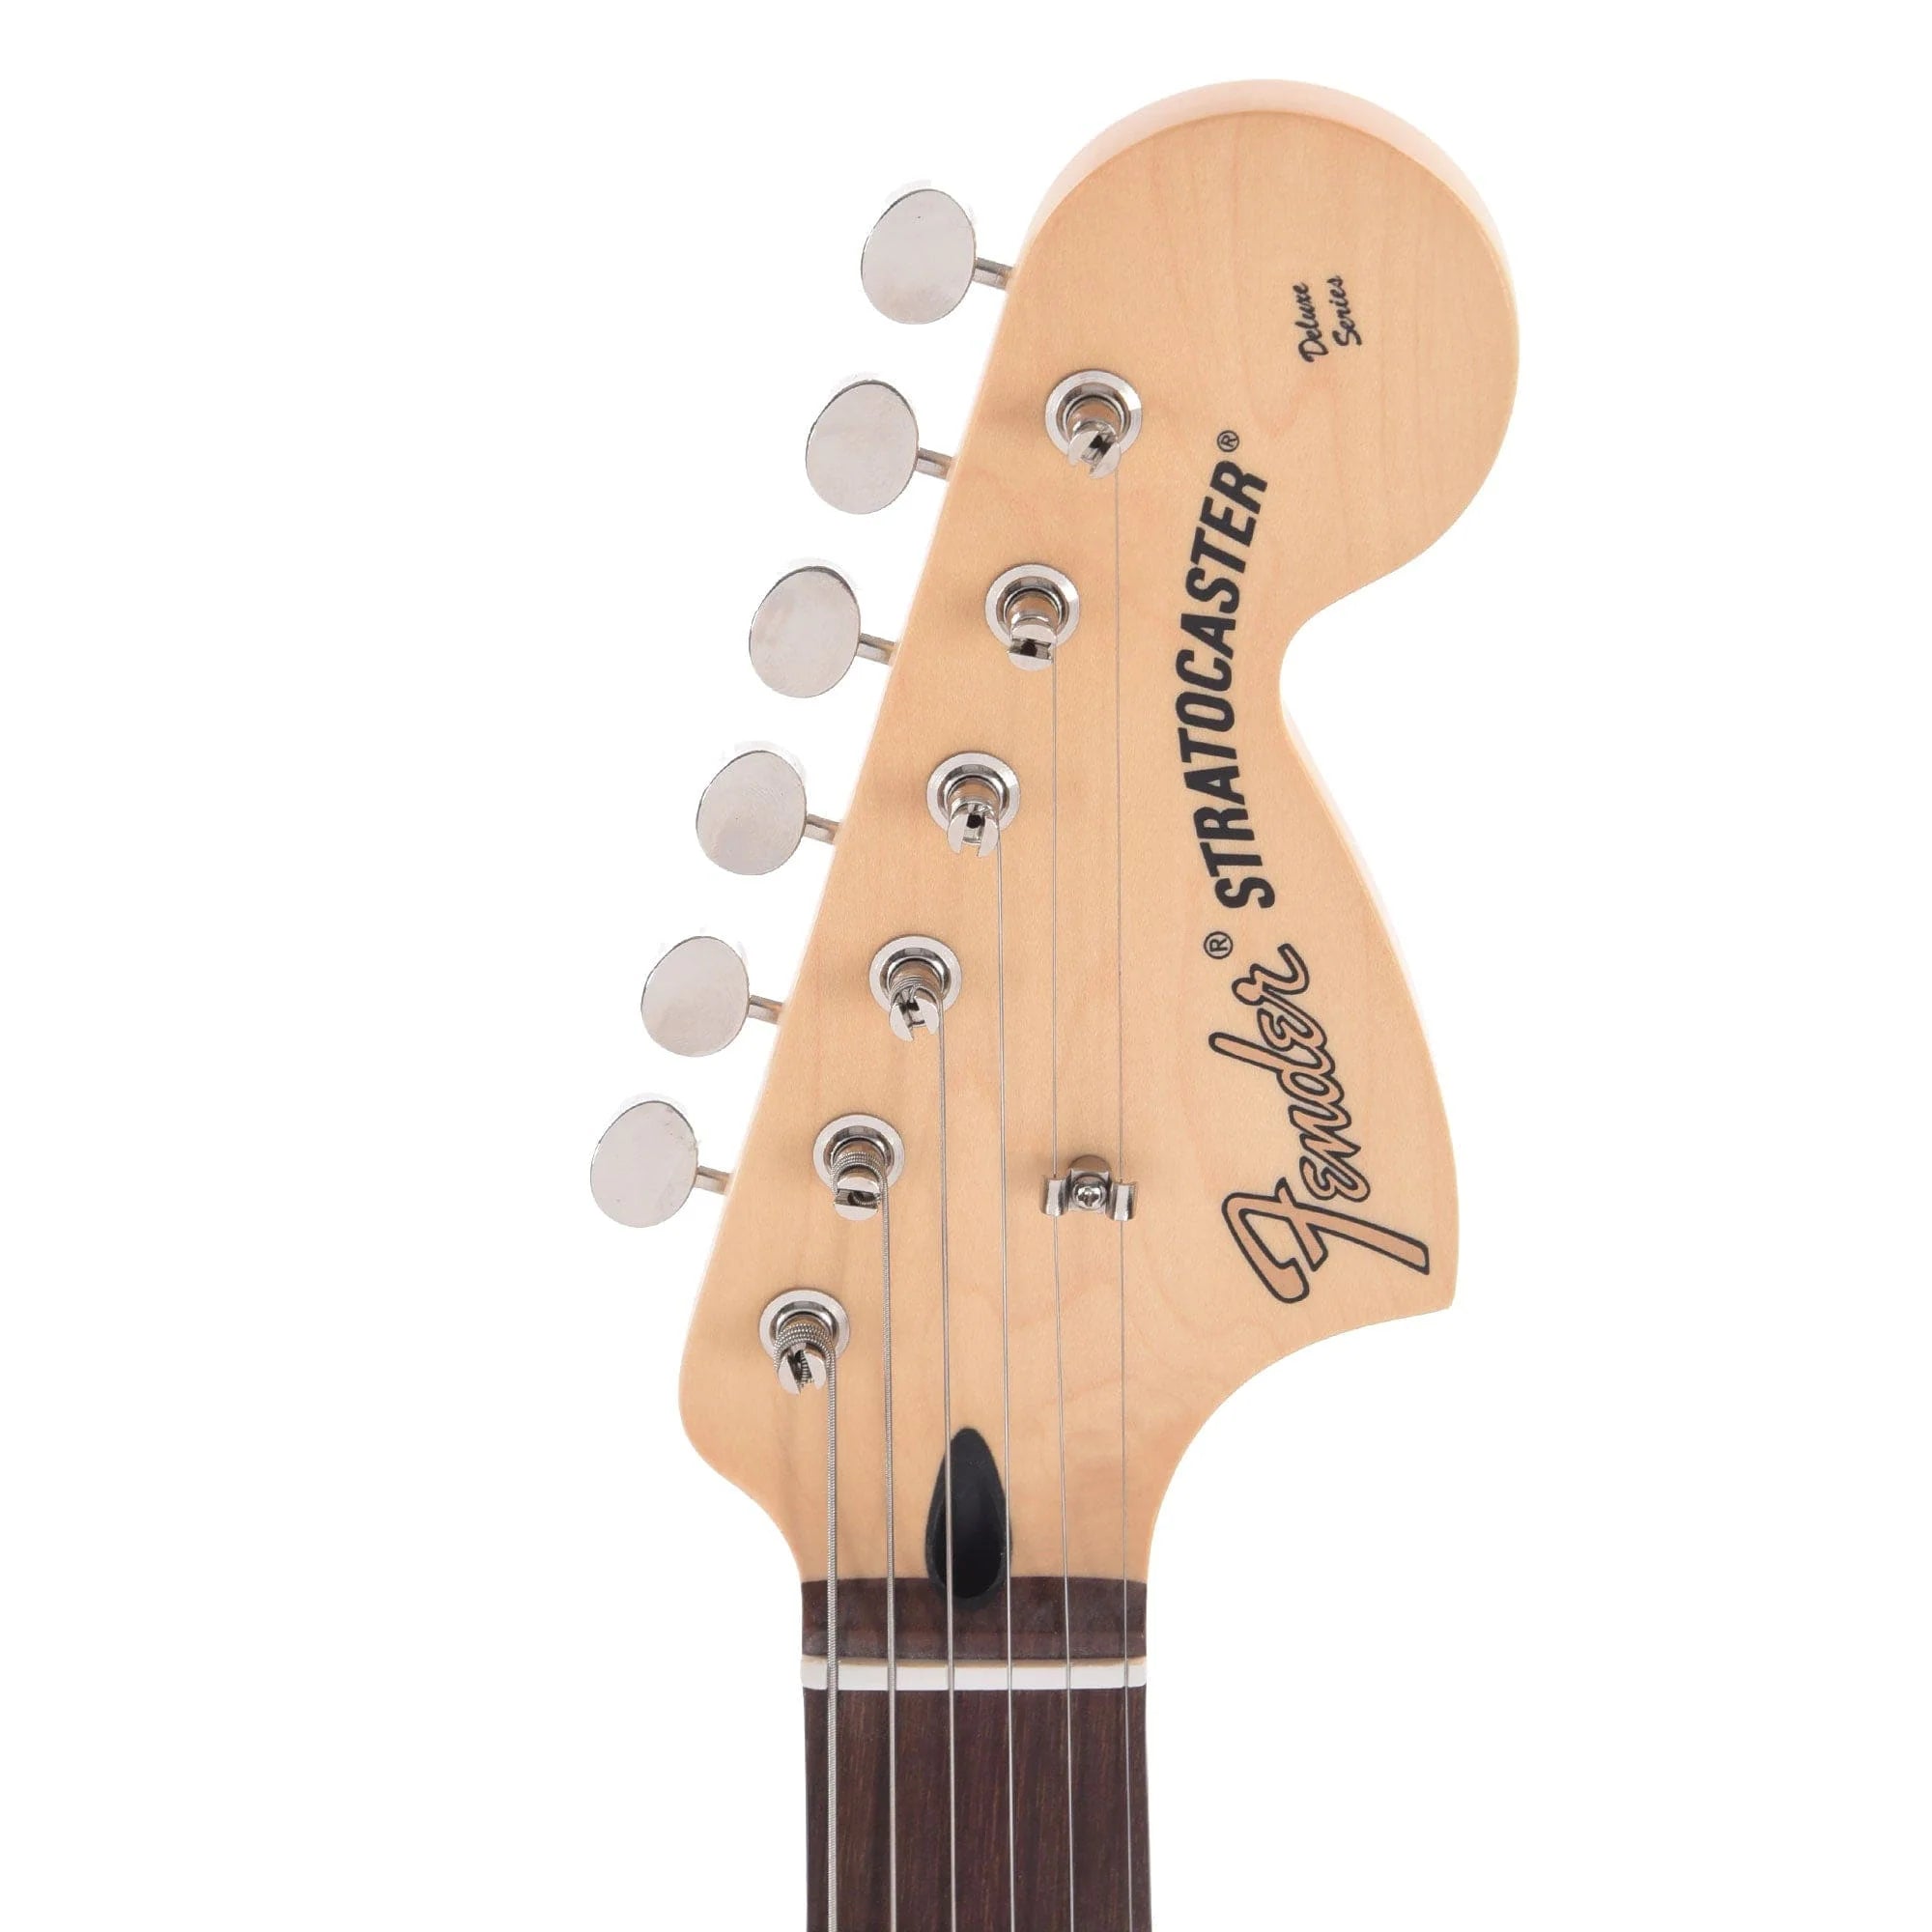 Fender Artist Limited Edition Tom DeLonge Stratocaster Graffiti Yellow